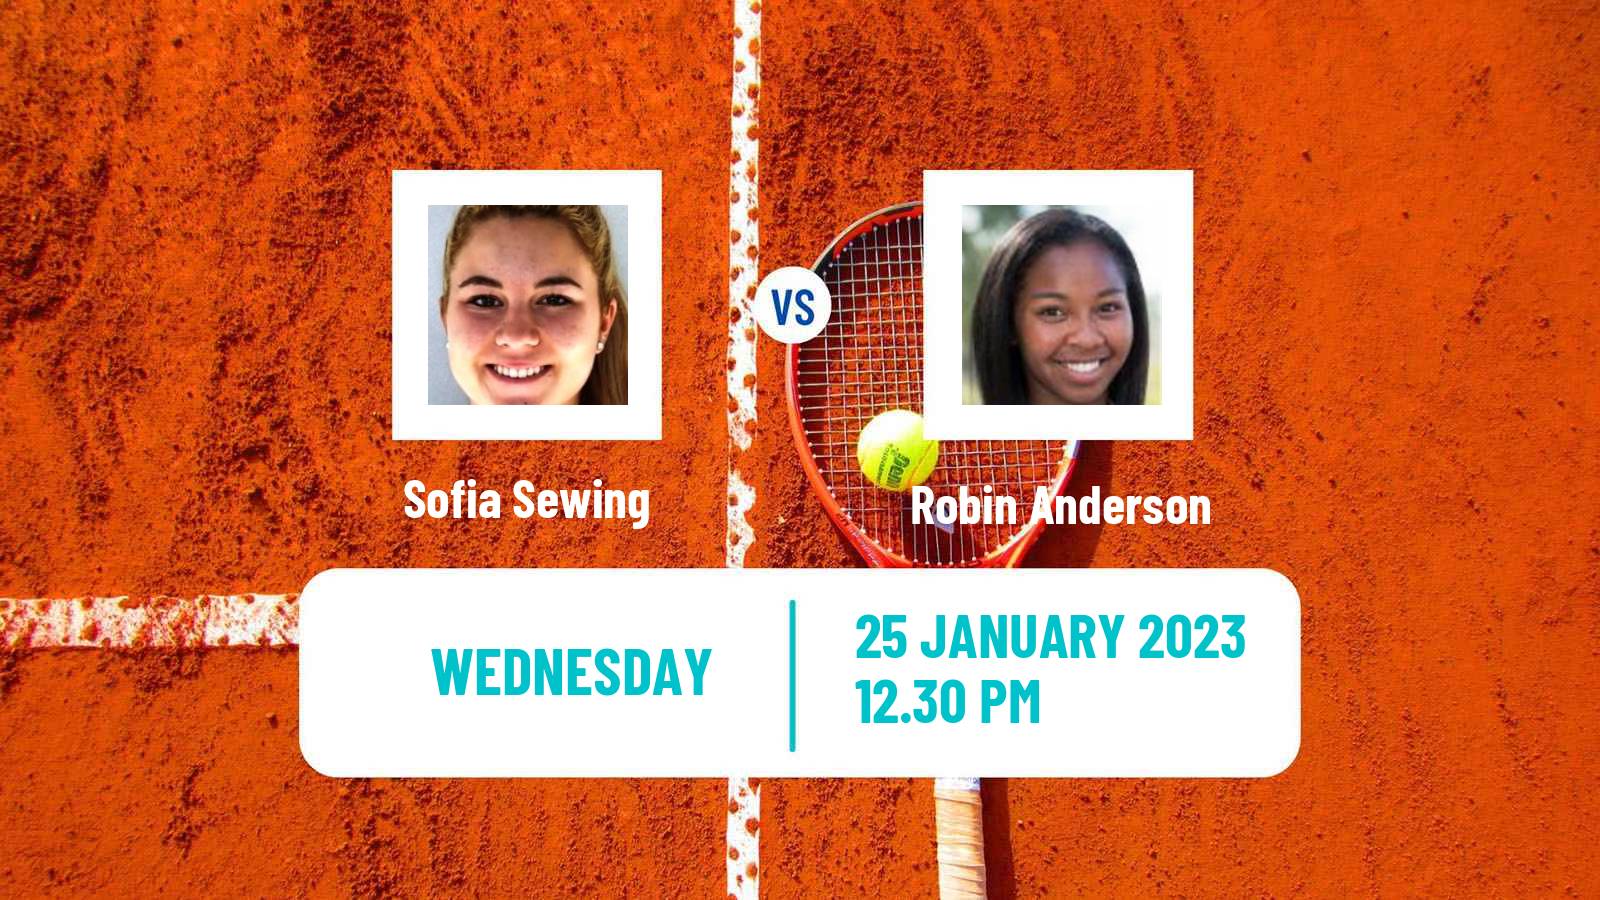 Tennis ITF Tournaments Sofia Sewing - Robin Anderson